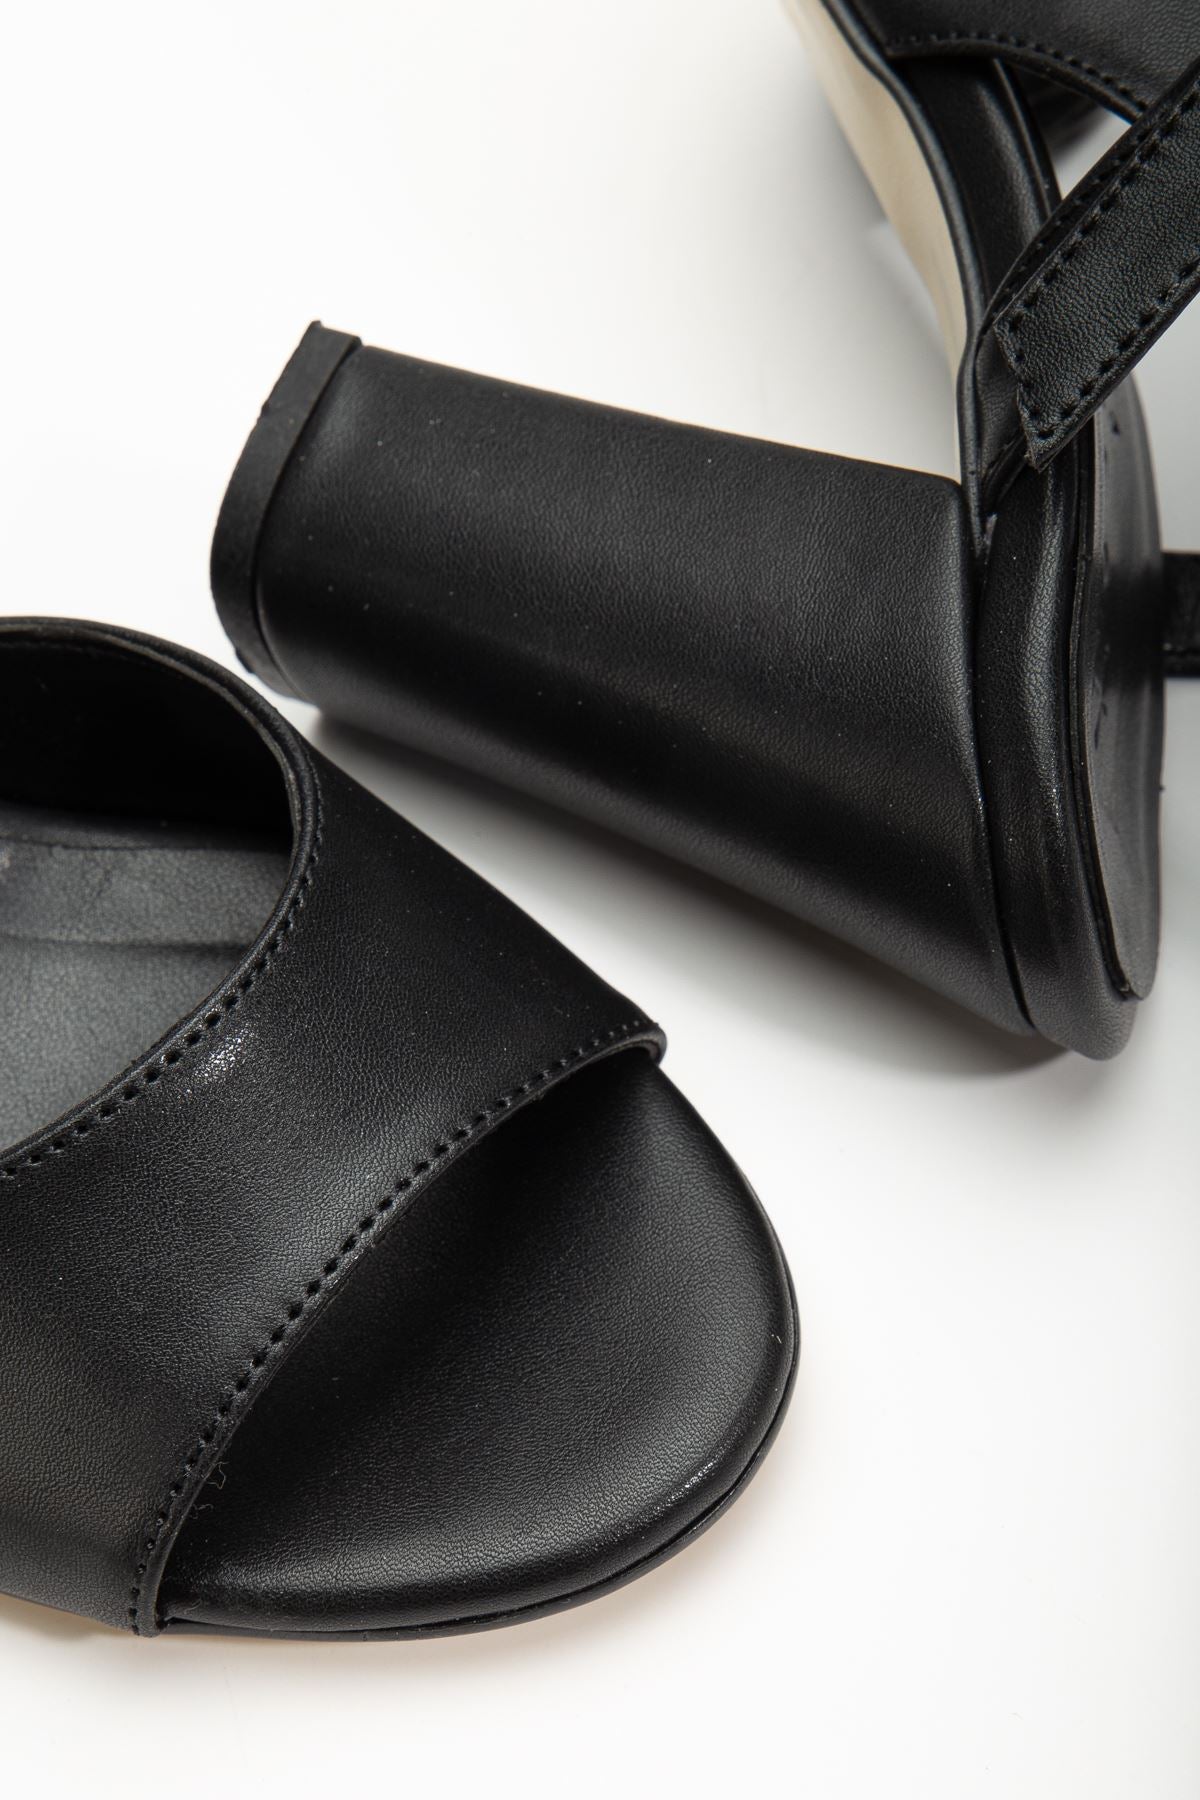 Lovisa Heeled Black Skin Women's Shoes - STREETMODE™